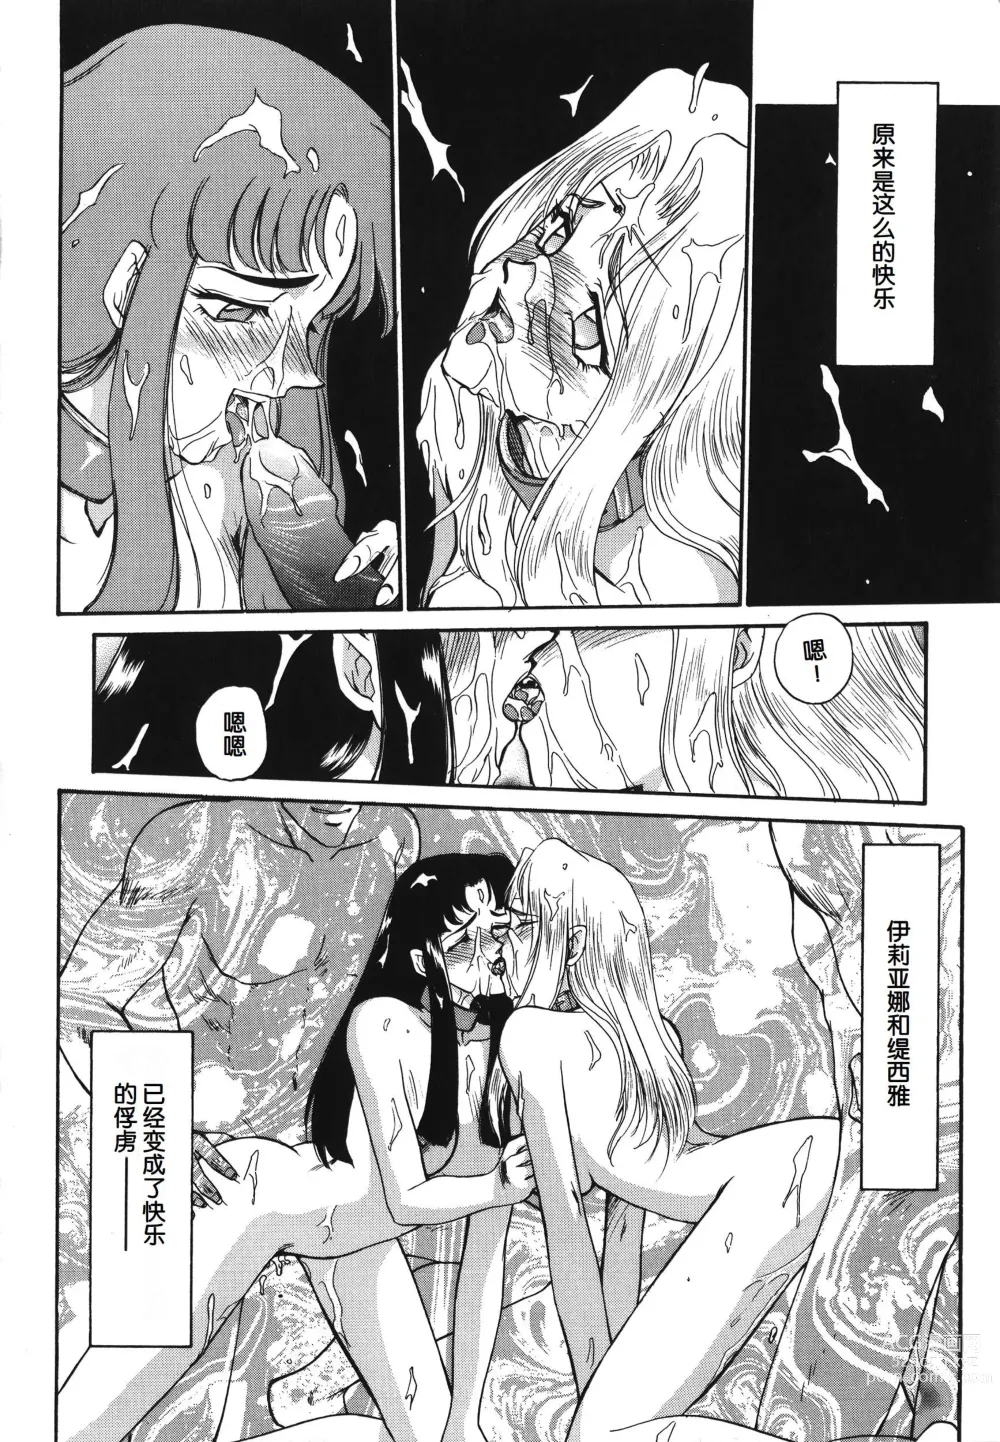 Page 34 of manga Bad Moon...